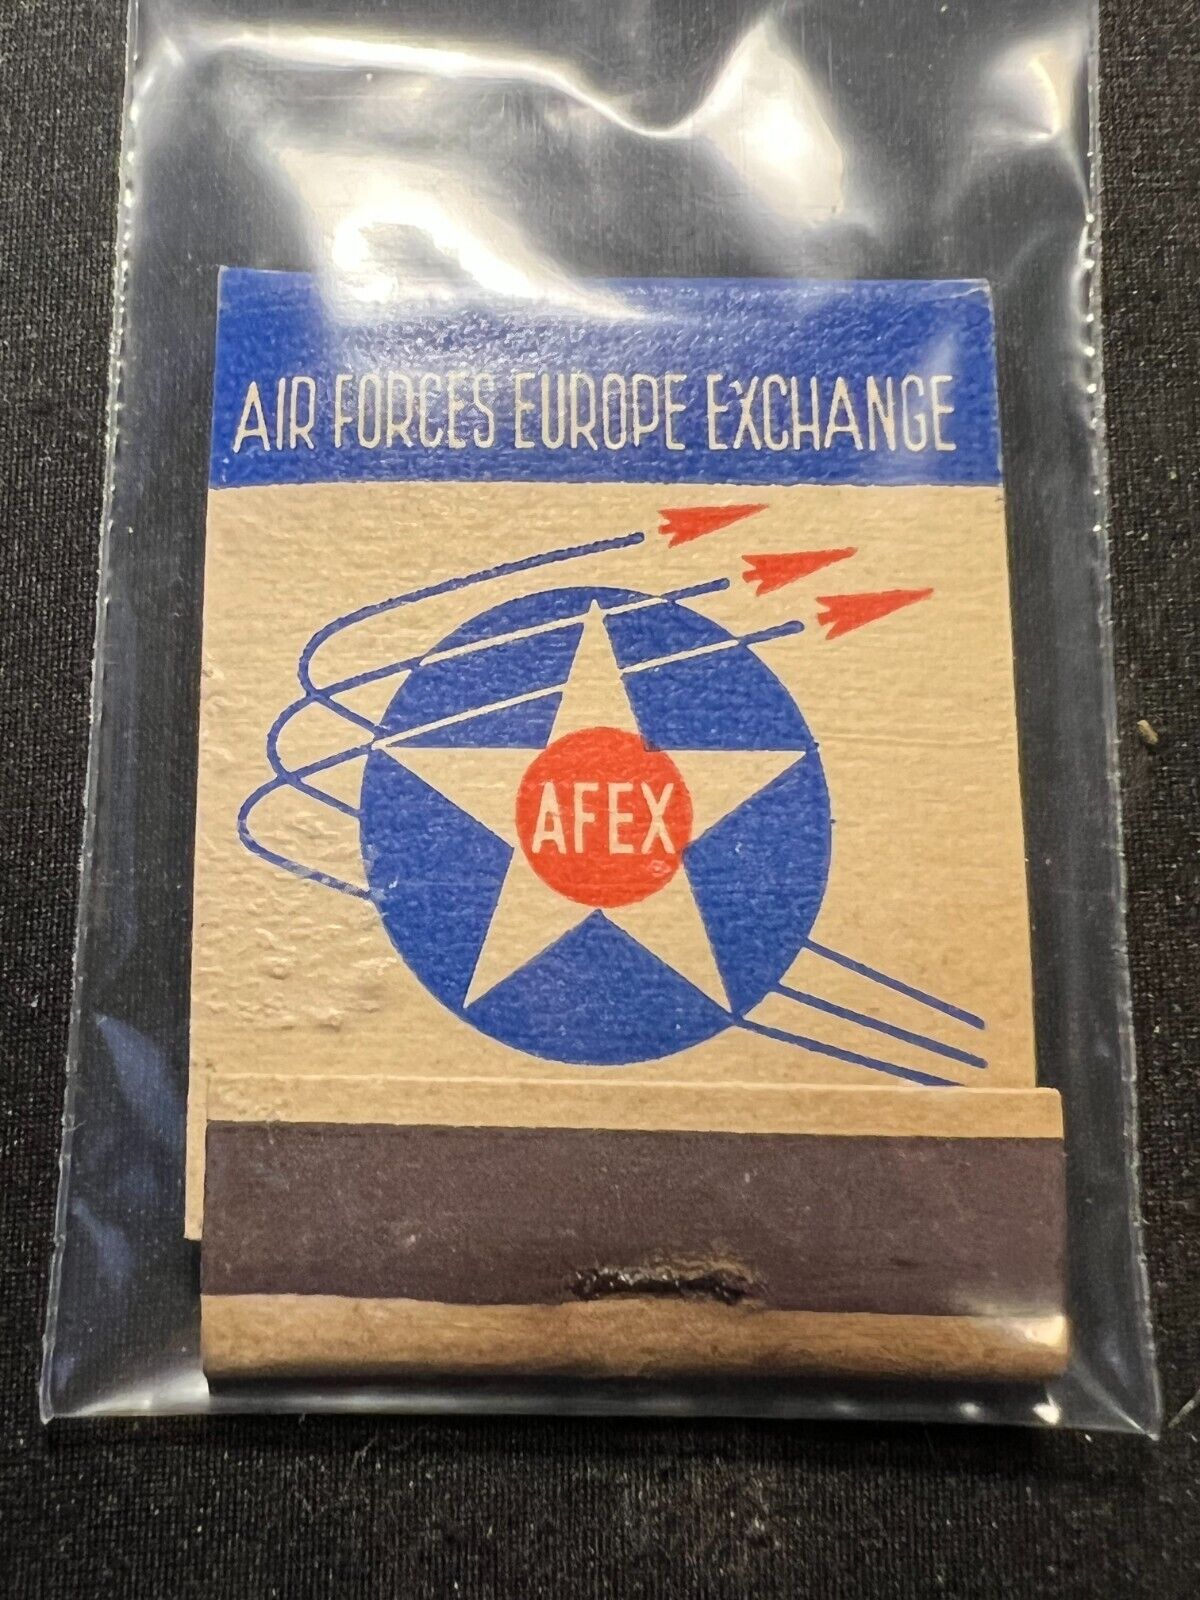 VINTAGE MATCHBOOK - AIR FORCE EUROPE EXCHANGE - AFEX - UNSTRUCK